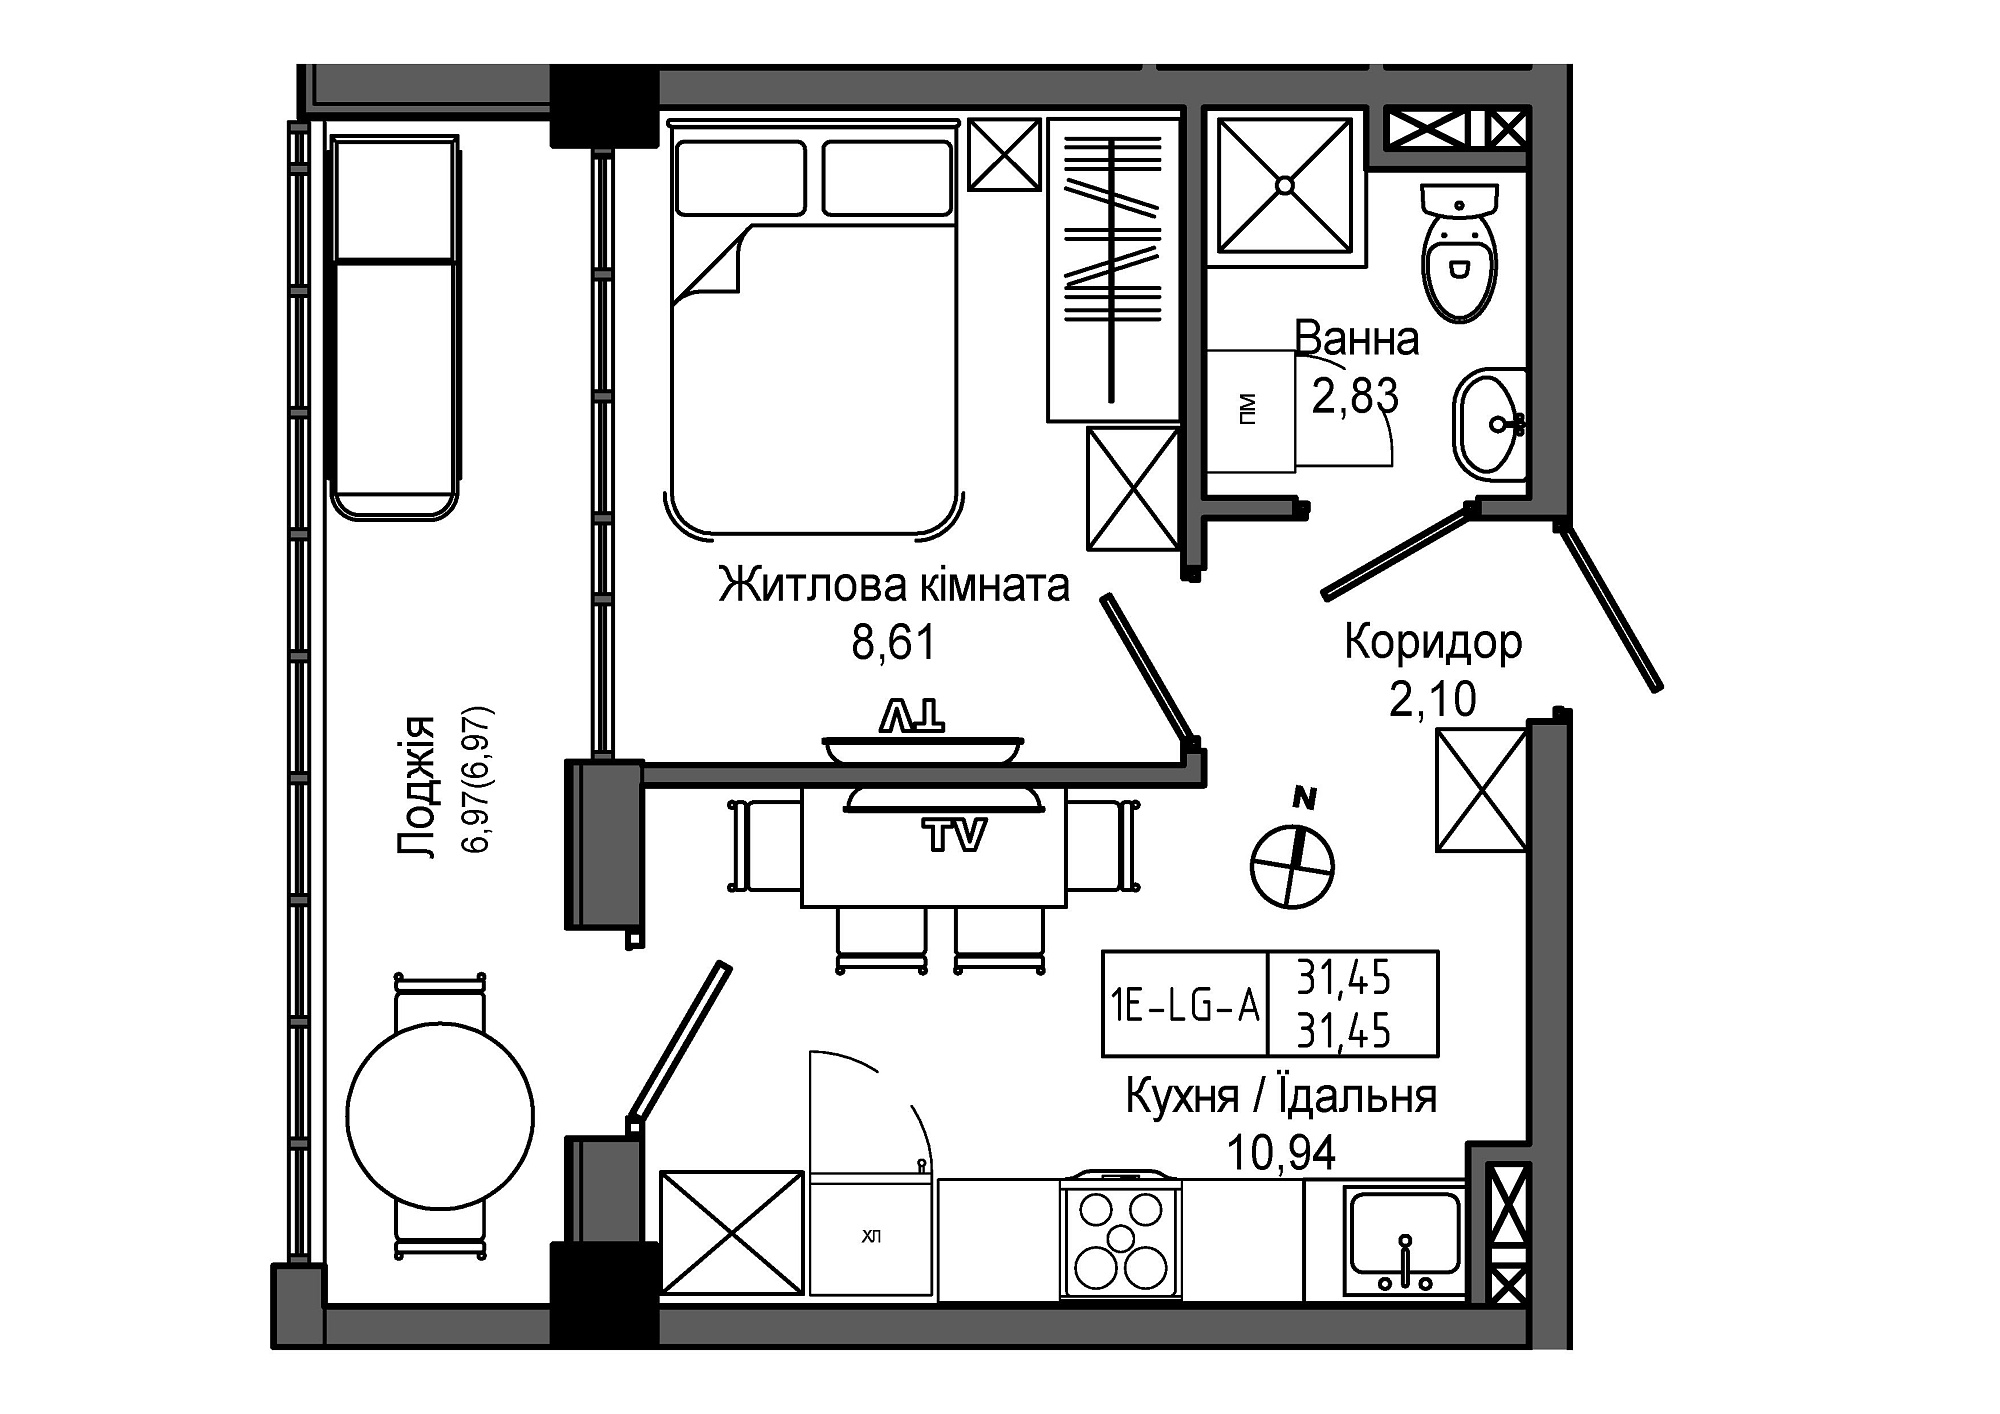 Планування 1-к квартира площею 31.45м2, UM-006-00/0011.